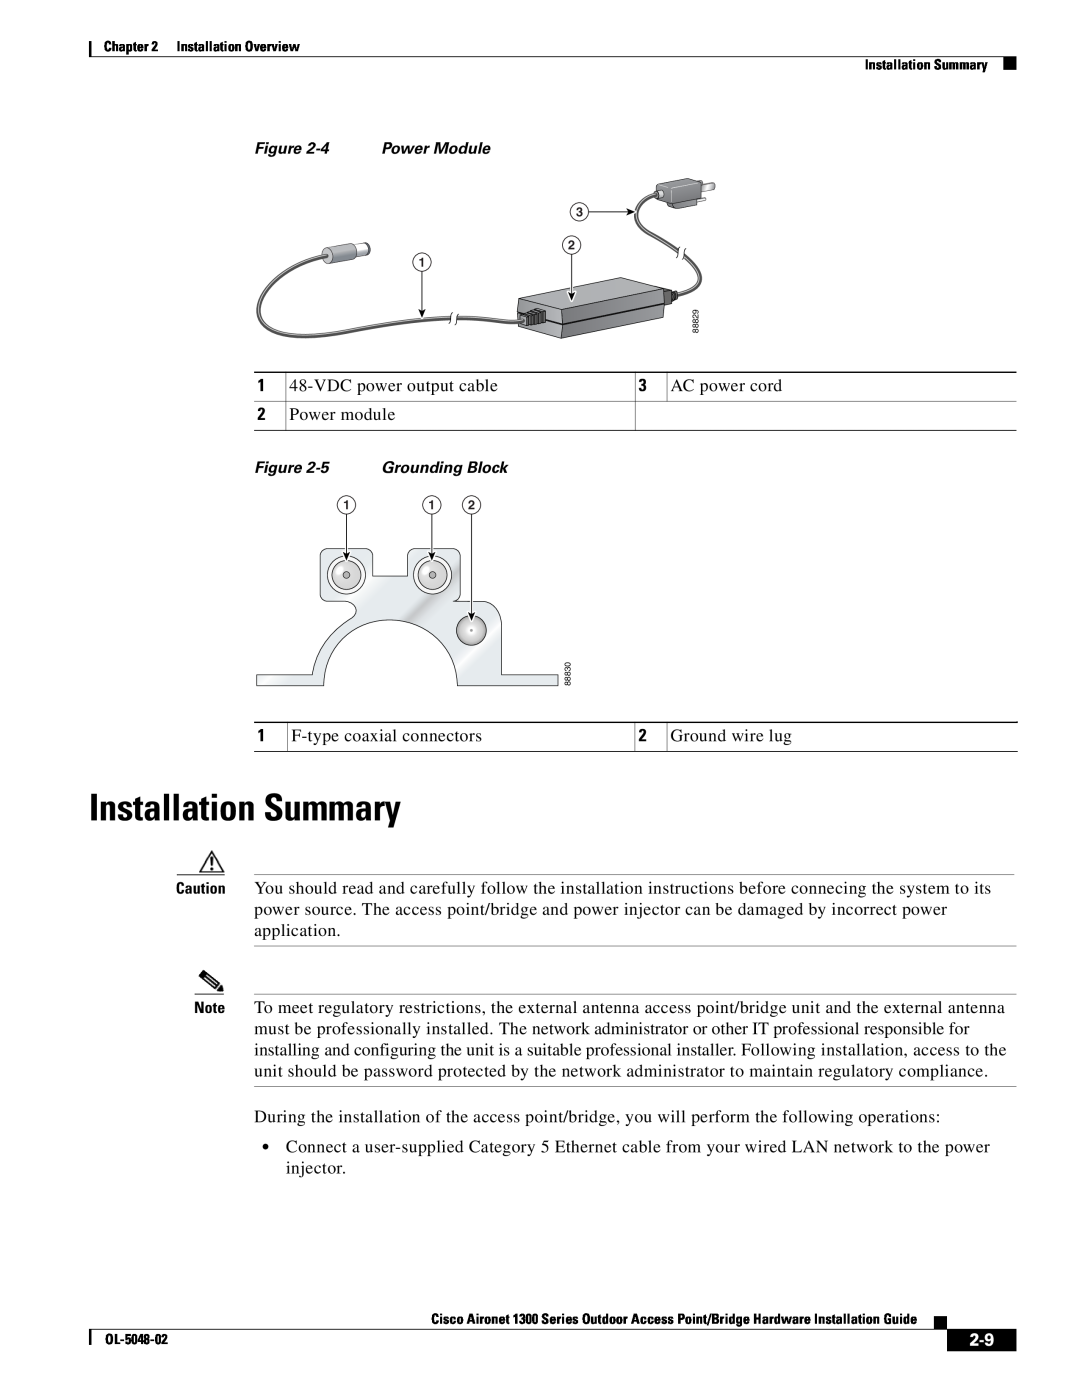 Cisco Systems 1300 Series manual Installation Summary, Power Module 